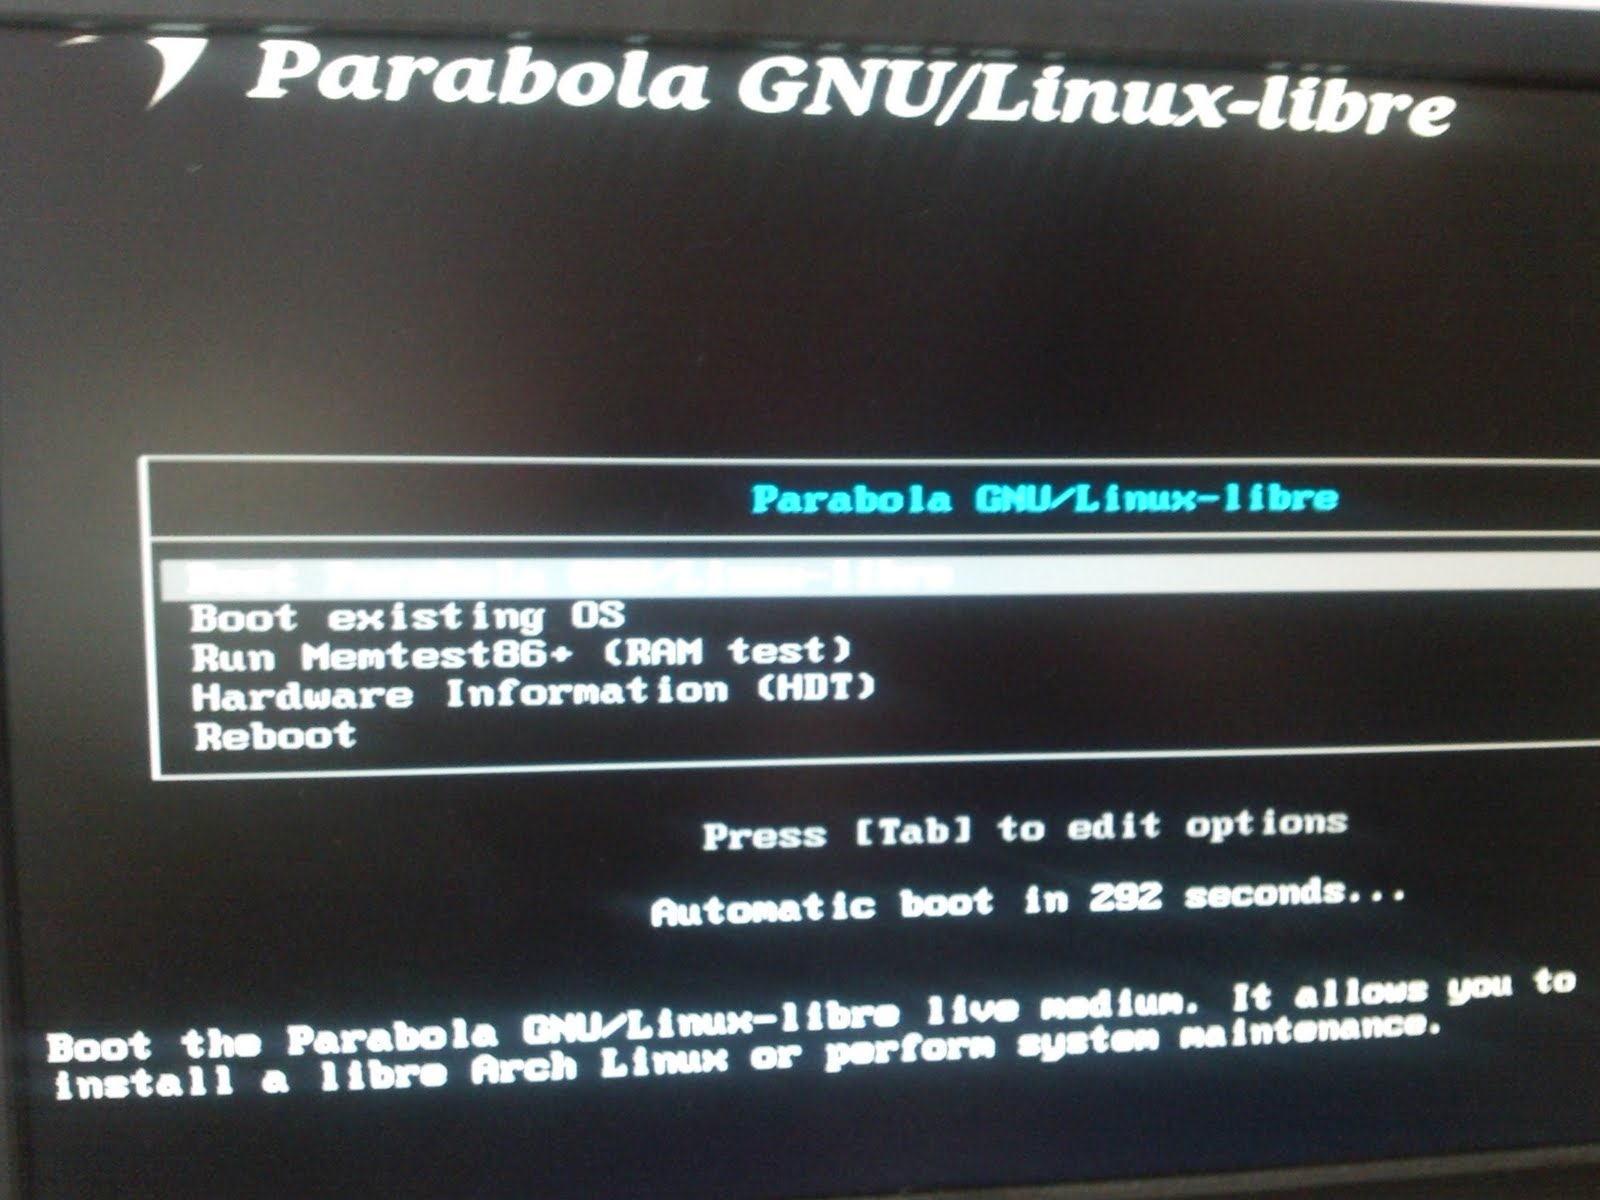 Boot-screeof GNU Parabola Linux